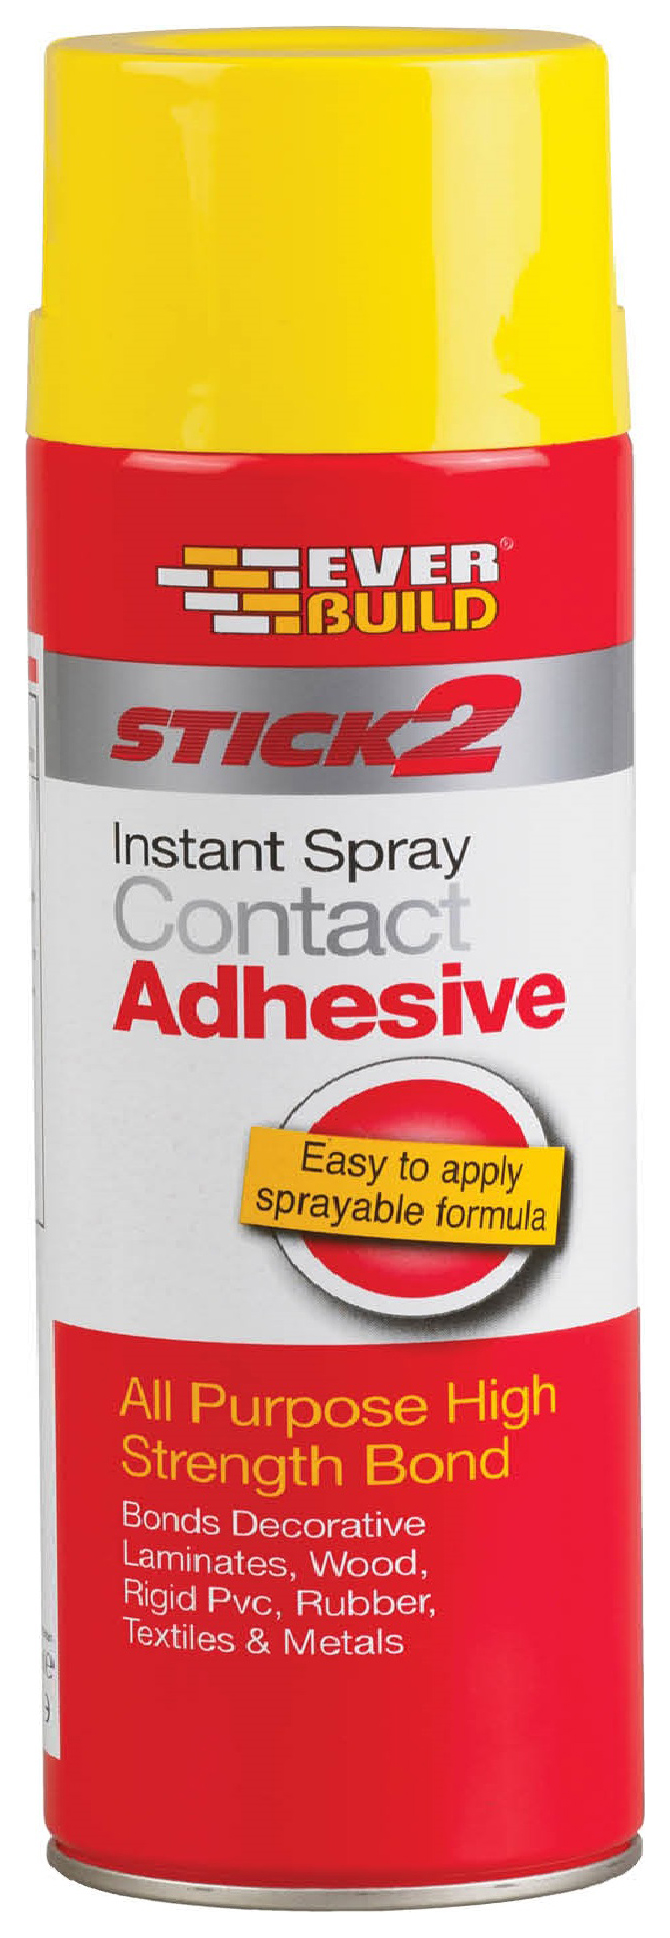 Everbuild Stick 2 Contact Adhesive Spray - 500ml